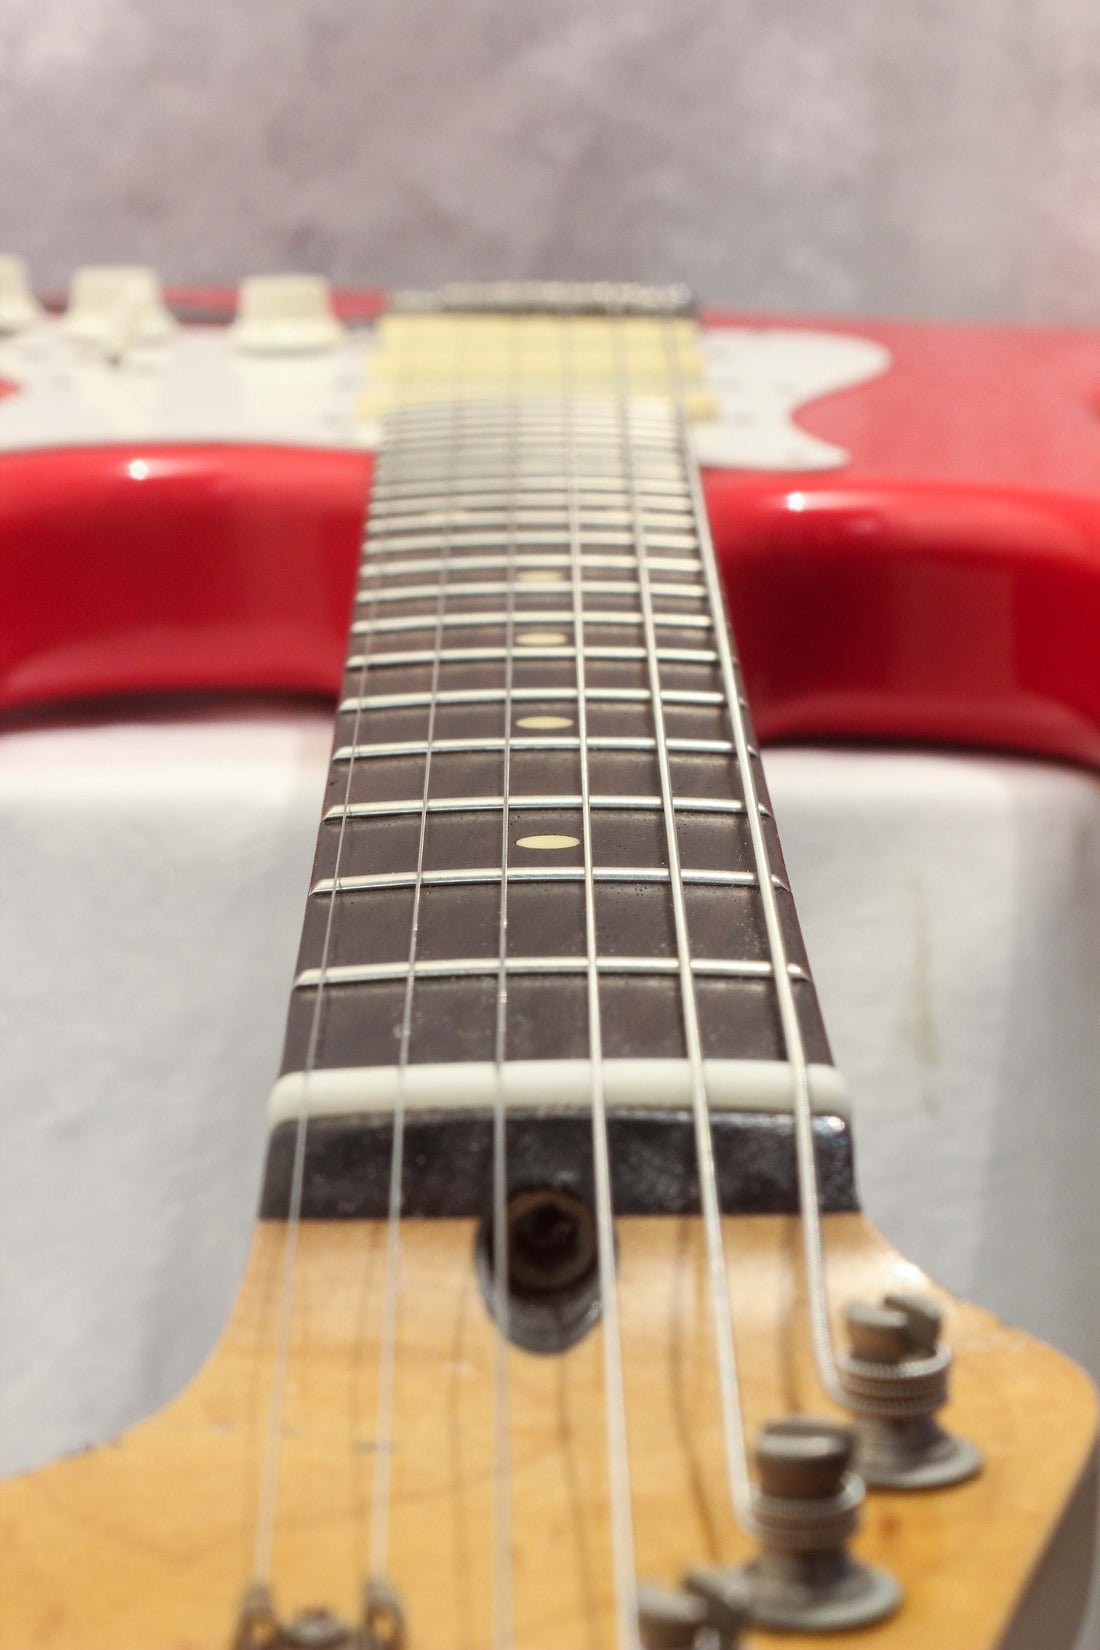 Fender Japan '54 Stratocaster ST54-85LS Fiesta Red 1987